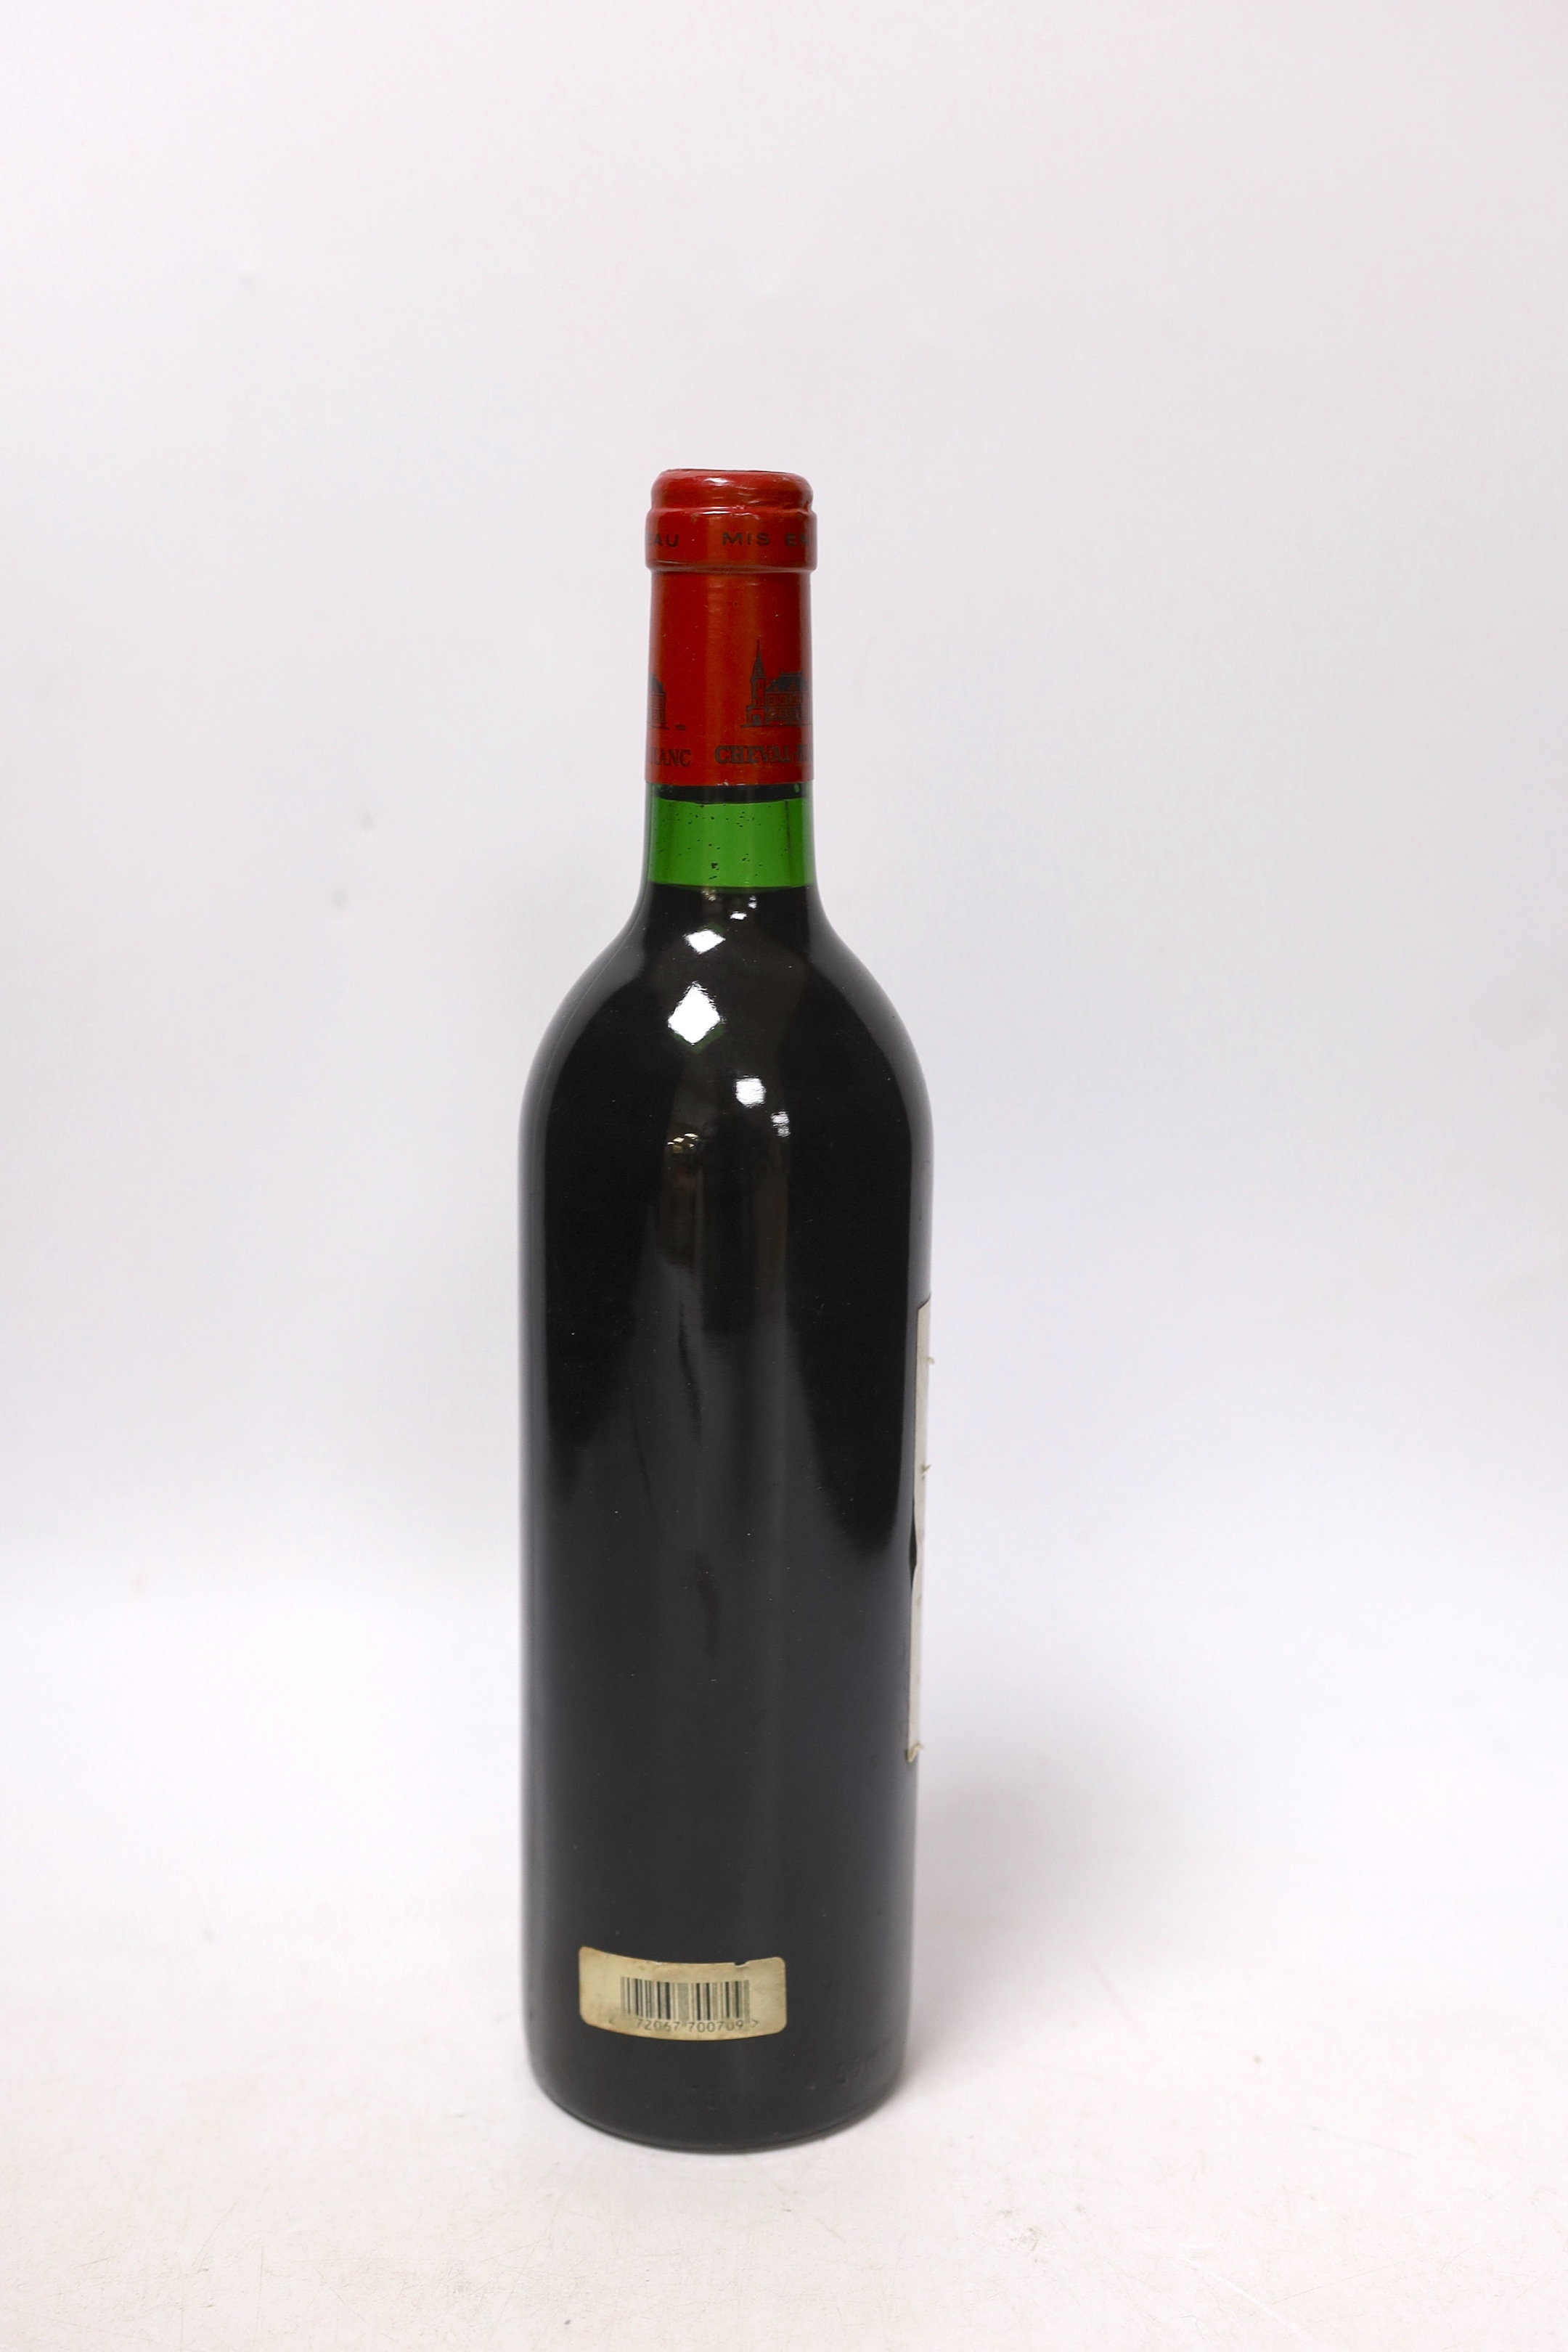 A bottle of Chateau Cheval Blanc St Emilion 1982 wine